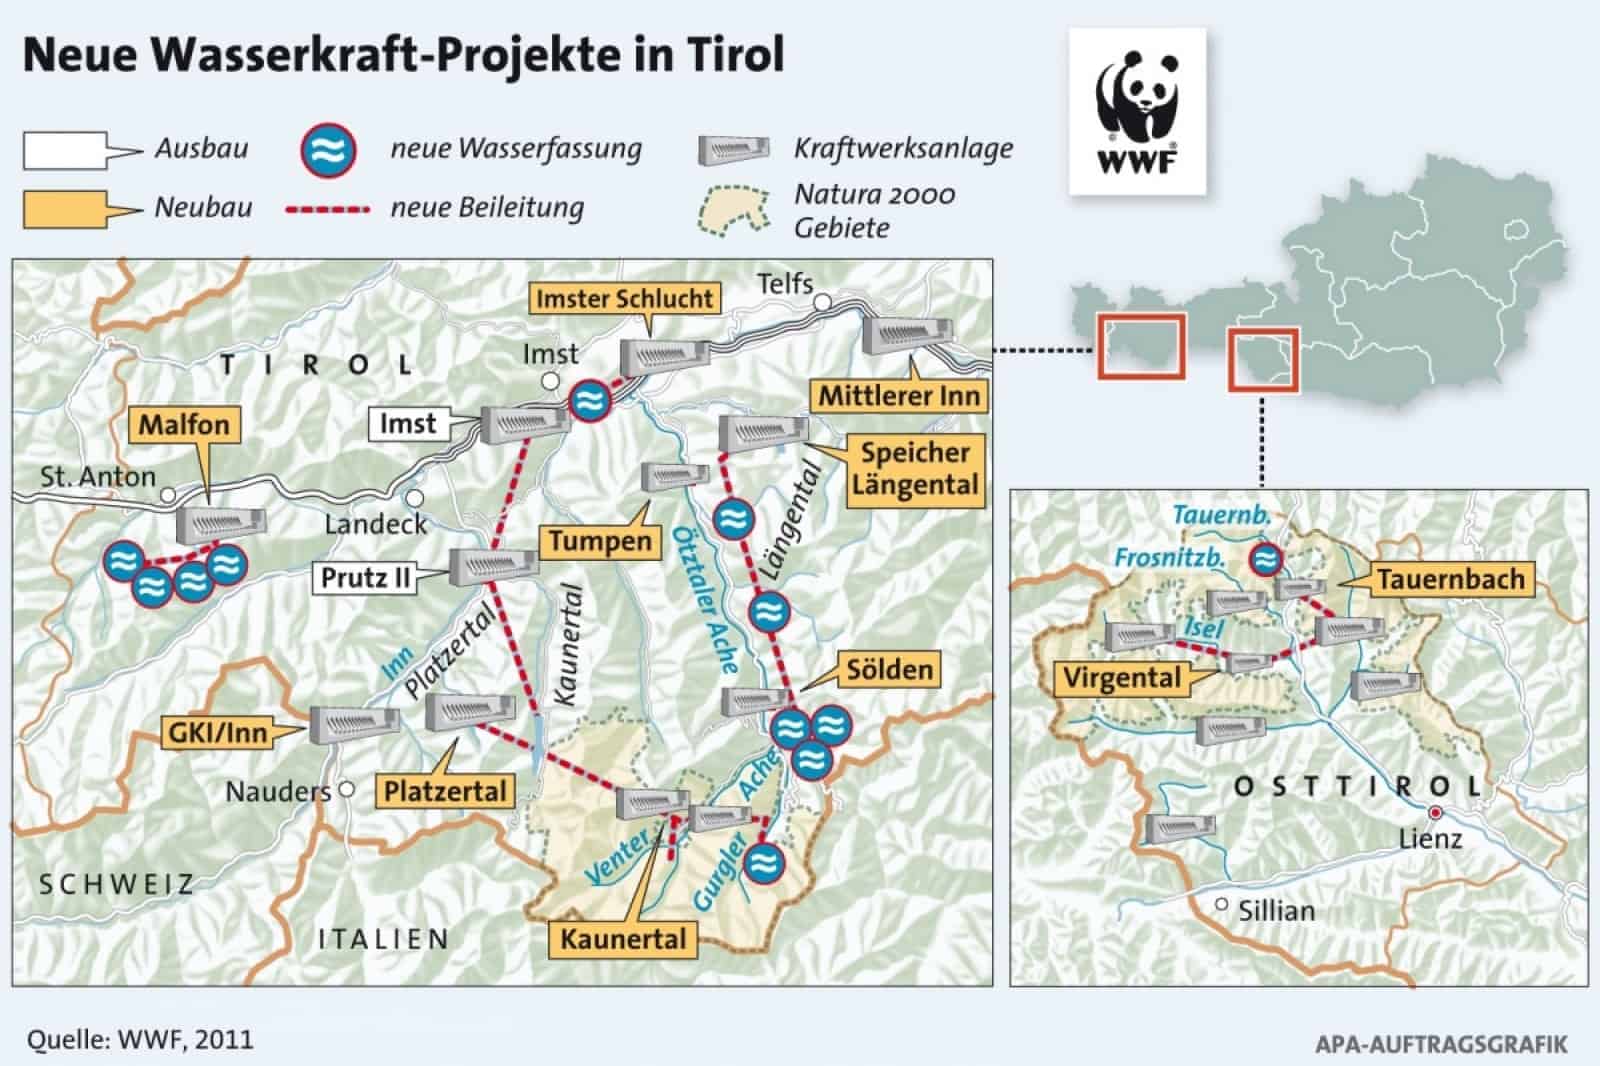 APA Grafik_Neue Wasserkraftprojekte in Tirol (c) WWF.jpg, © by WWF